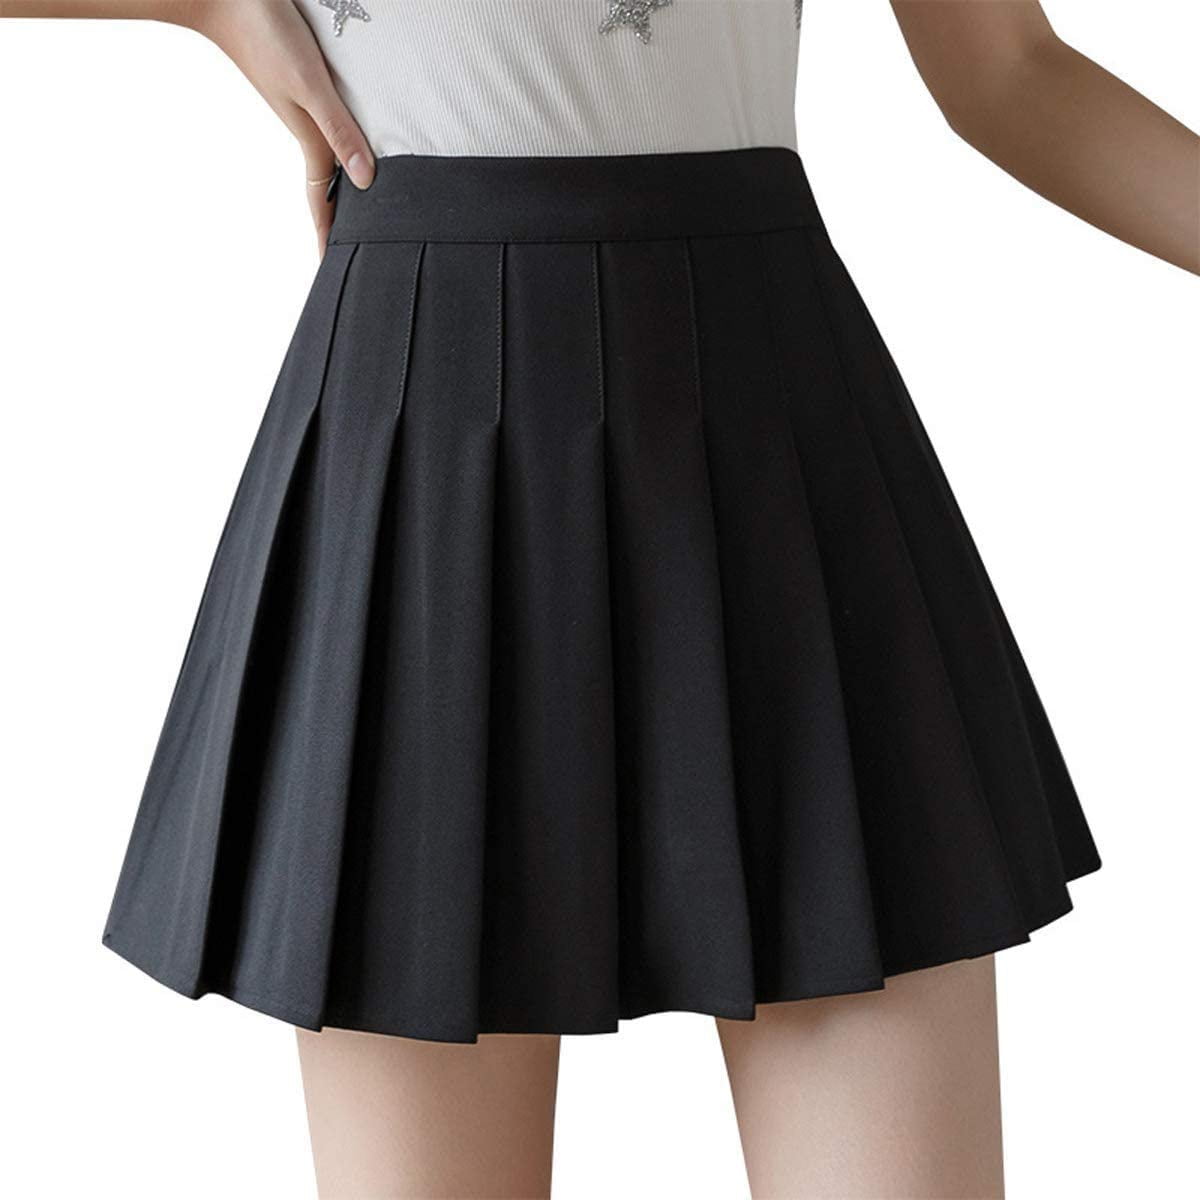 Girls Ladies A Line Plain Pencil Skirt School Work Uniform Skirt Black Grey Navy